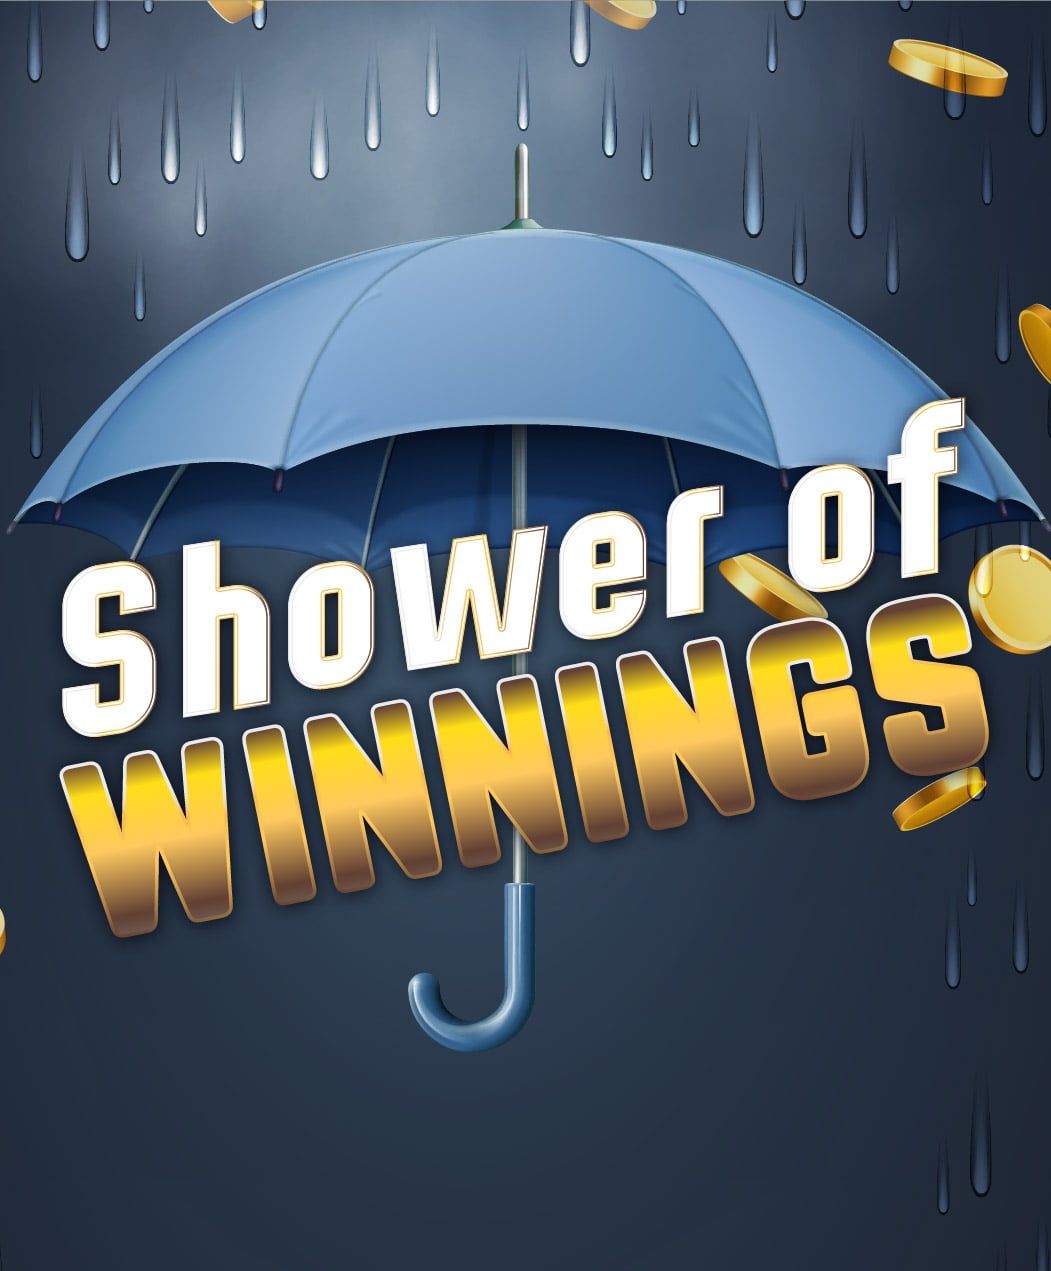 Shower Of Winnings